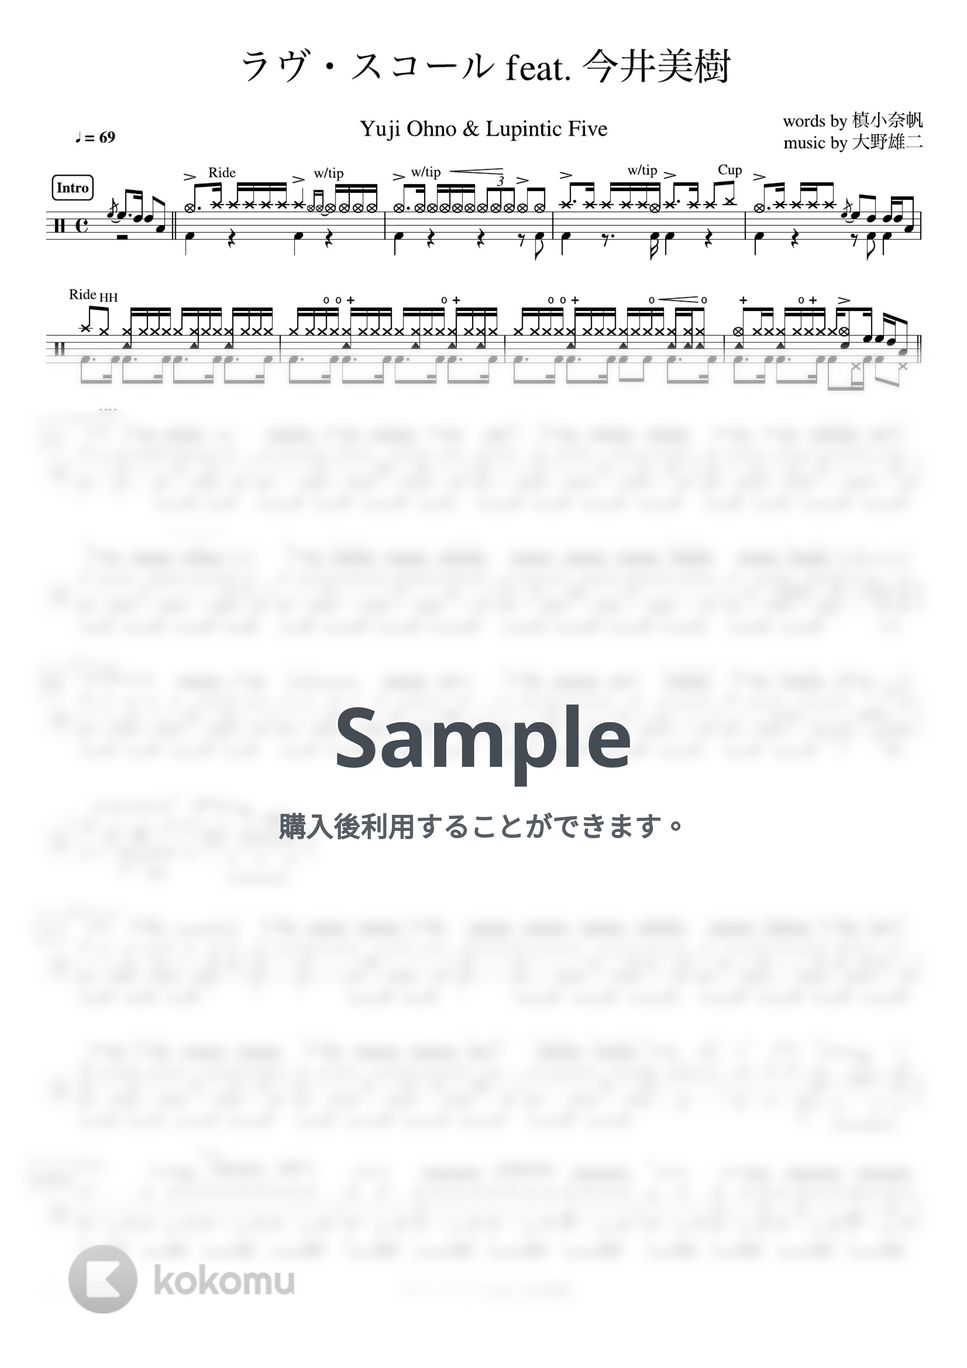 Yuji Ohno & Lupintic Five with Miki Imai - ラヴ・スコール feat. 今井美樹 by ドラムが好き！